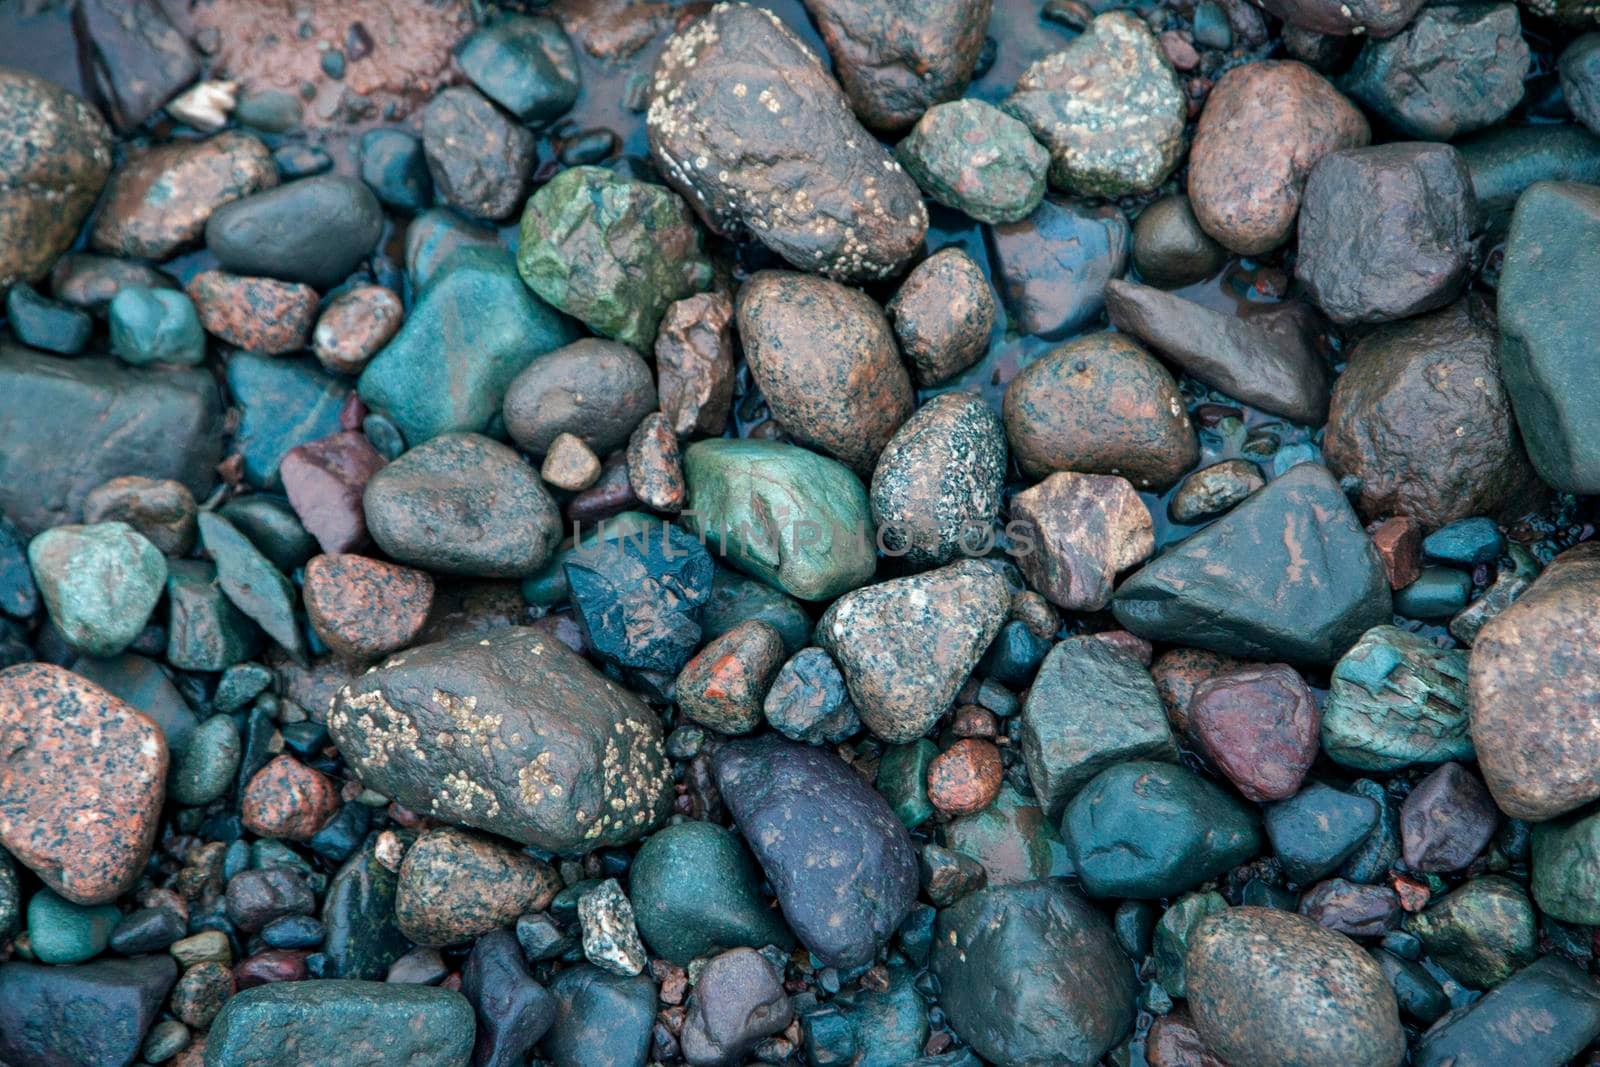 wet rocks on the ocean floor in blue hues by rustycanuck